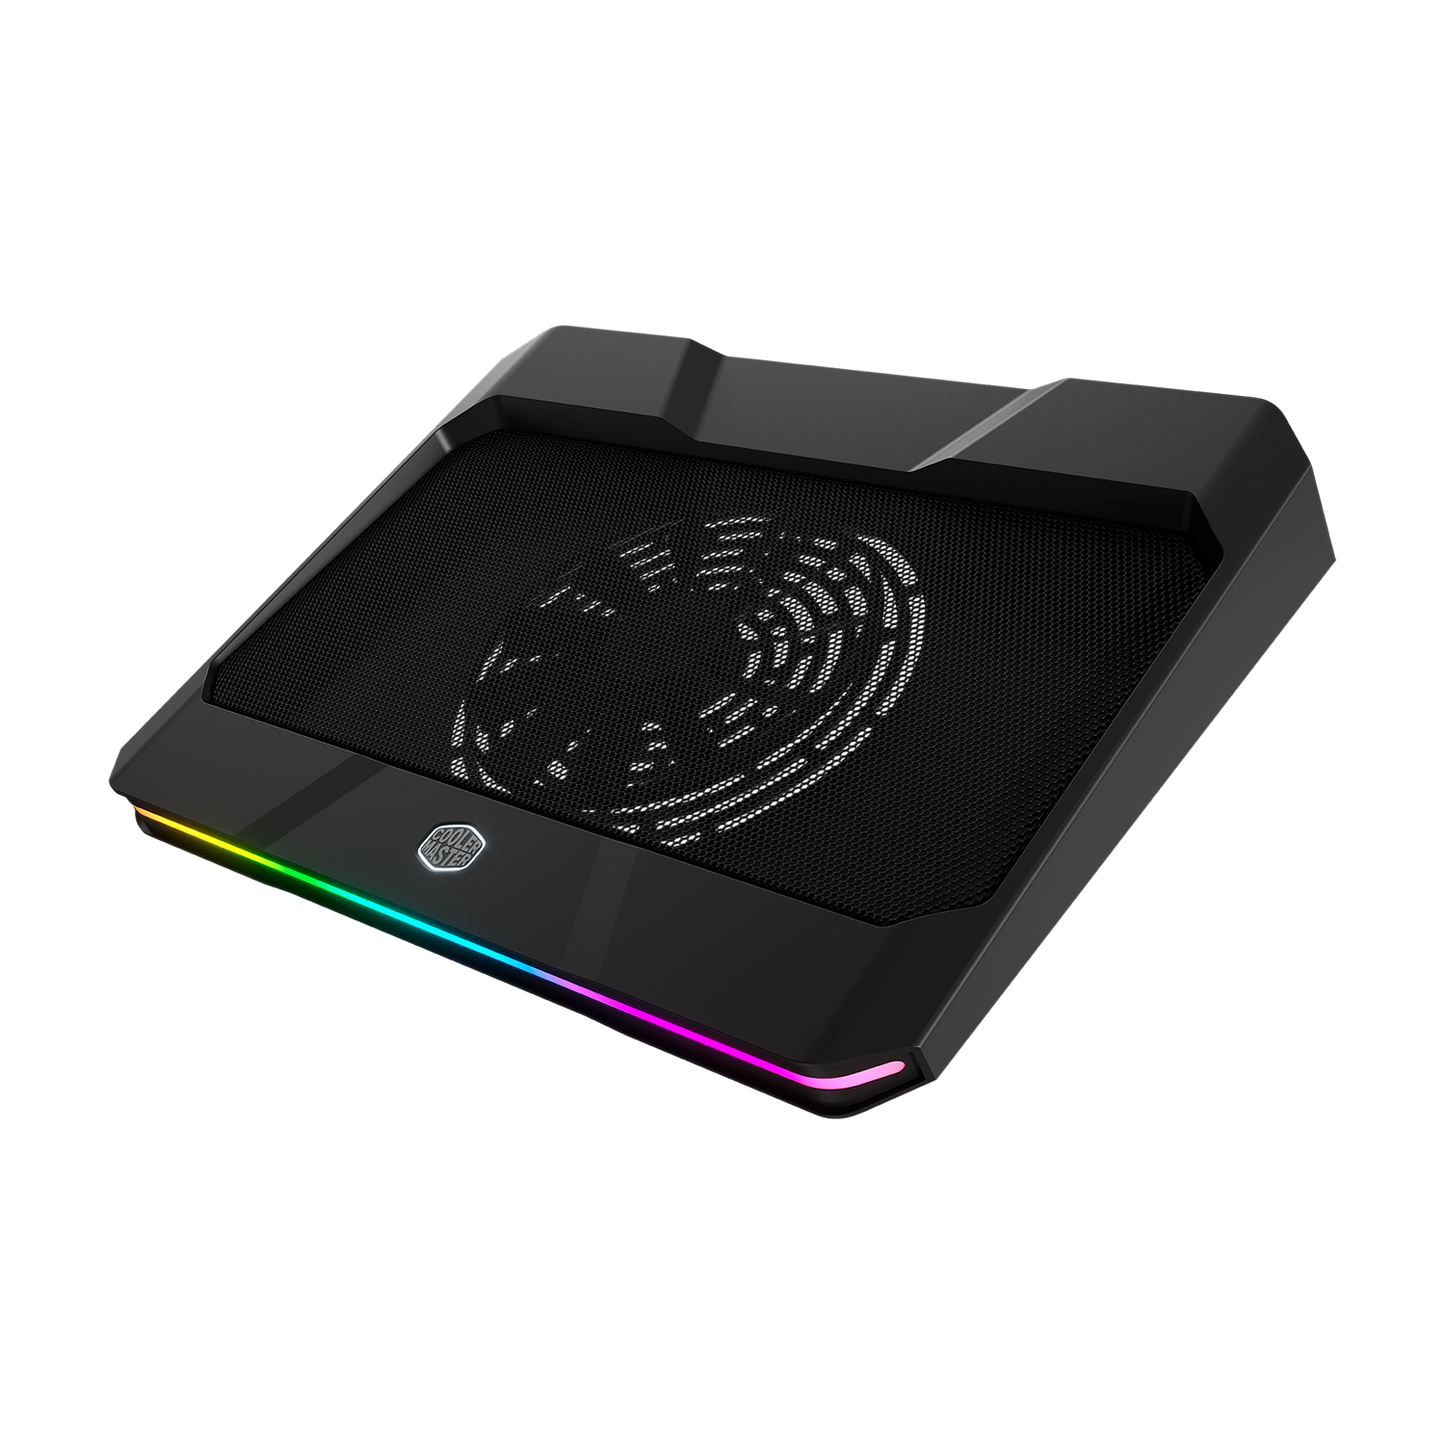 Cooler Master NotePal X150 Spectrum